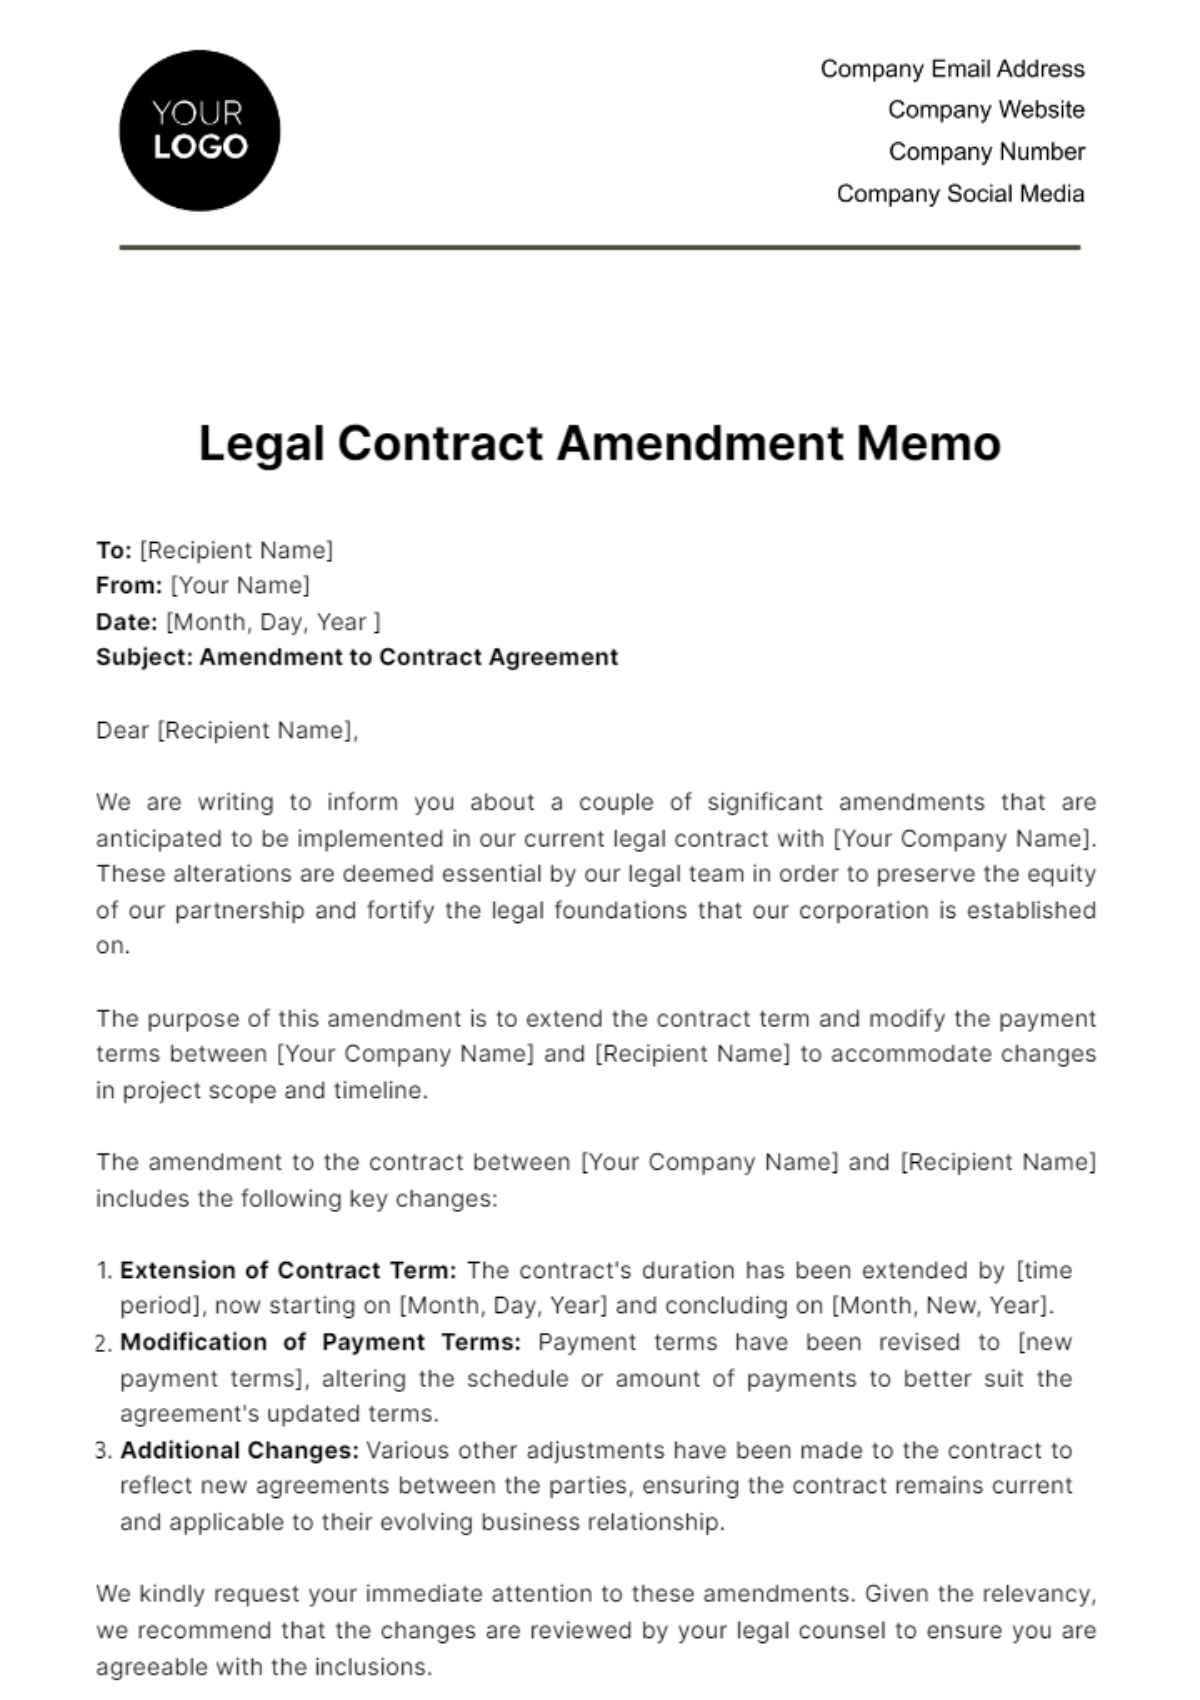 Legal Contract Amendment Memo Template